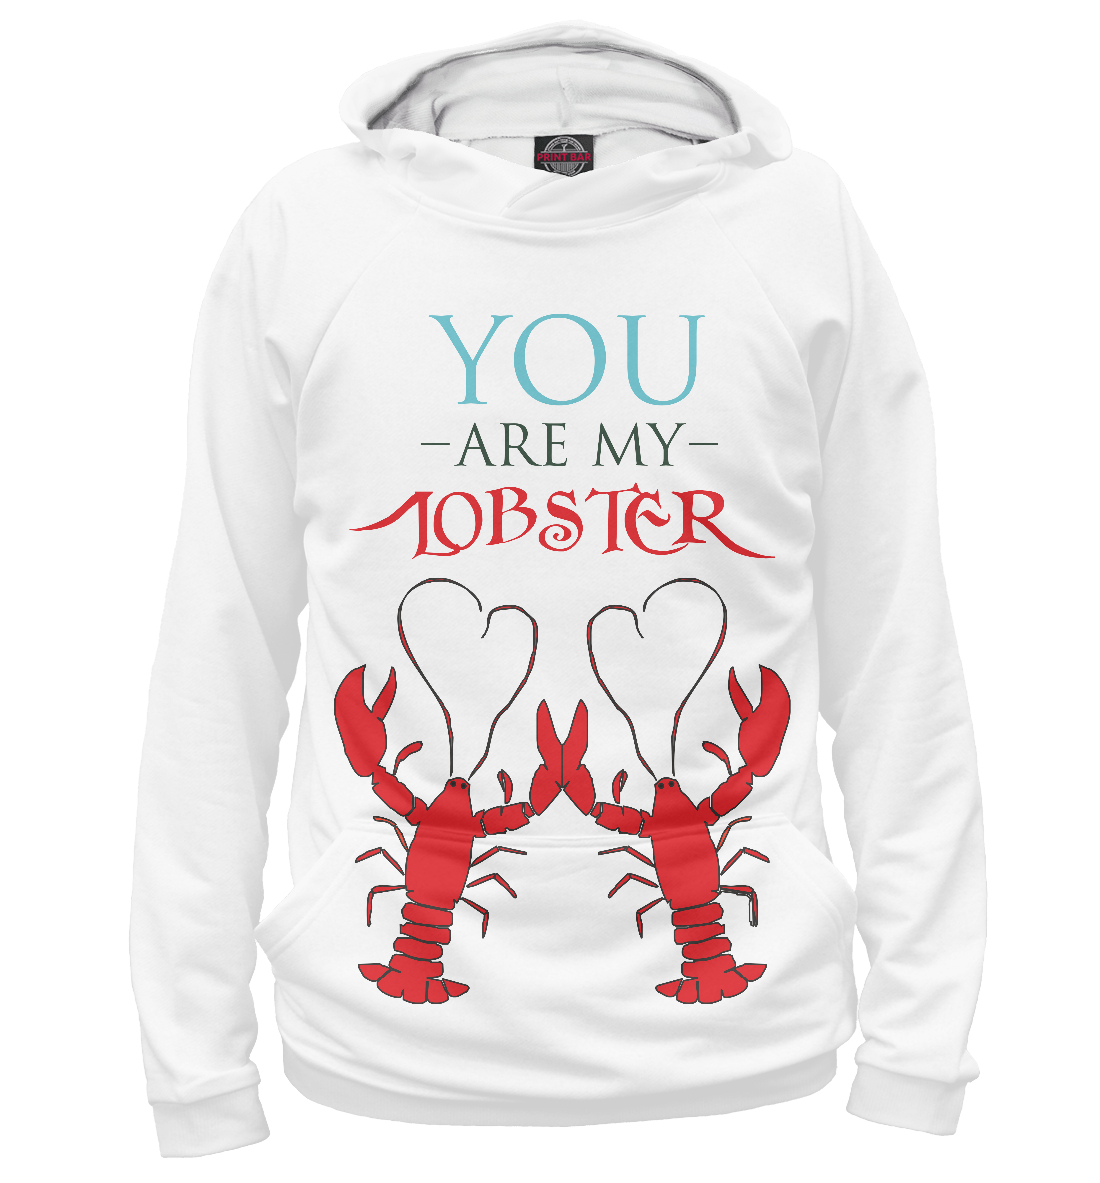 Женский Худи с принтом You are my lobster, артикул 14F-969615-hud-1mp